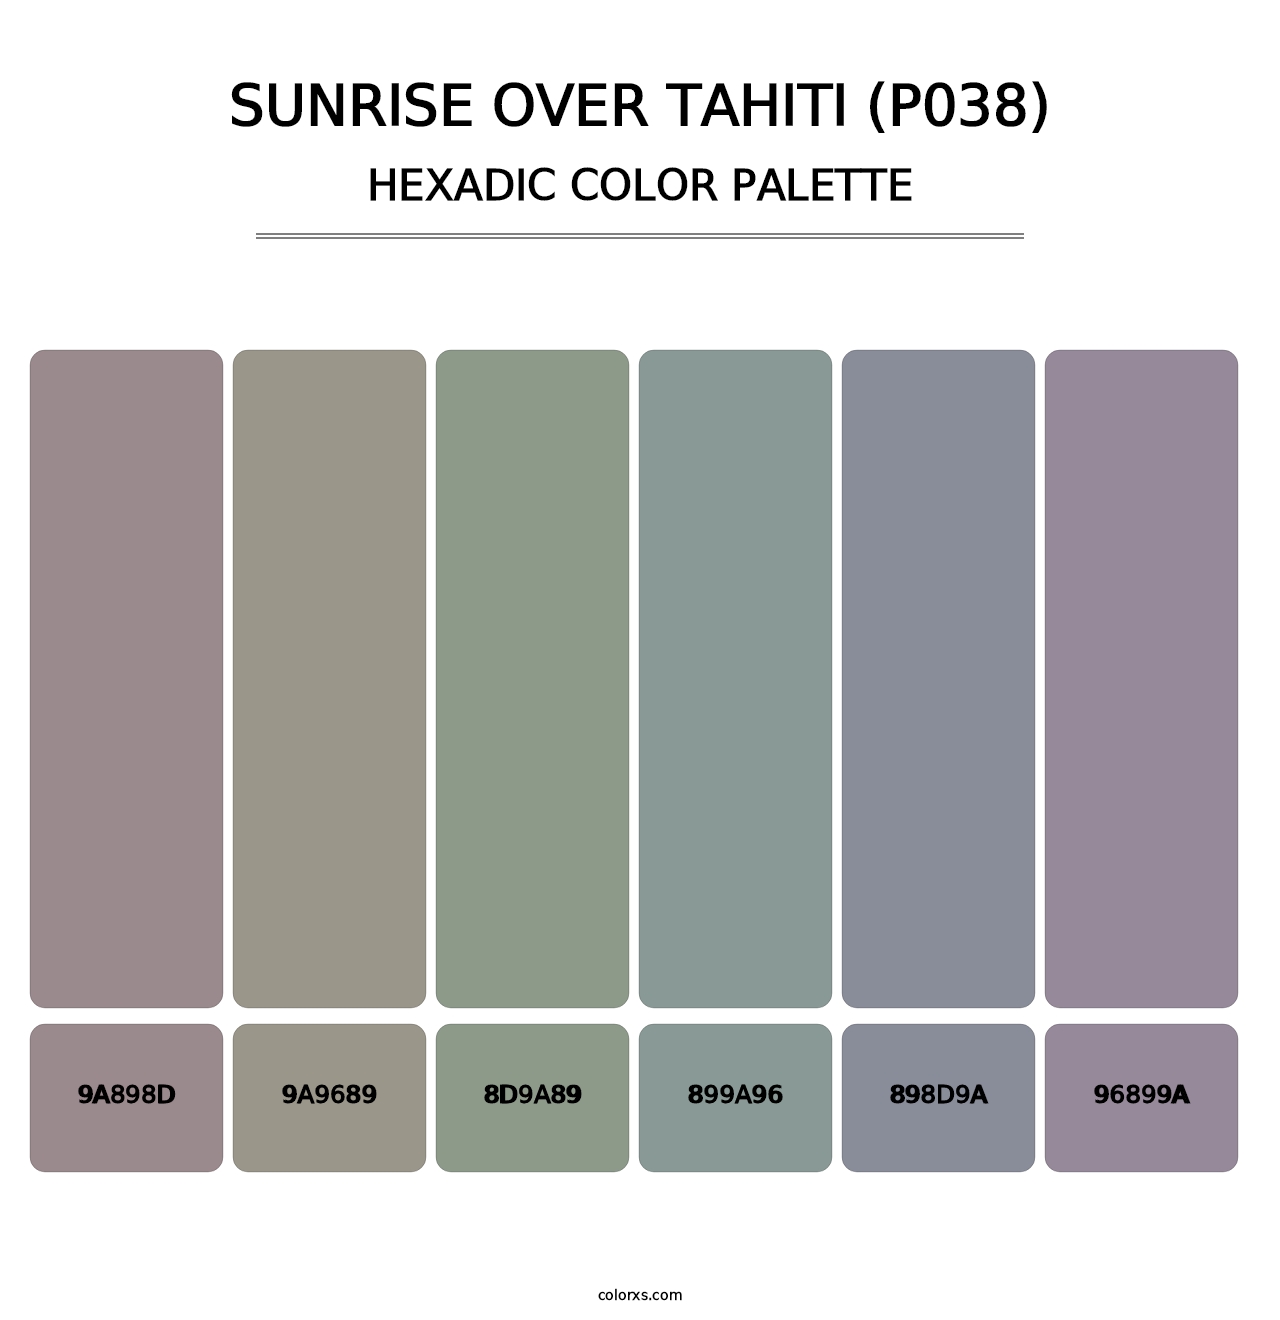 Sunrise Over Tahiti (P038) - Hexadic Color Palette